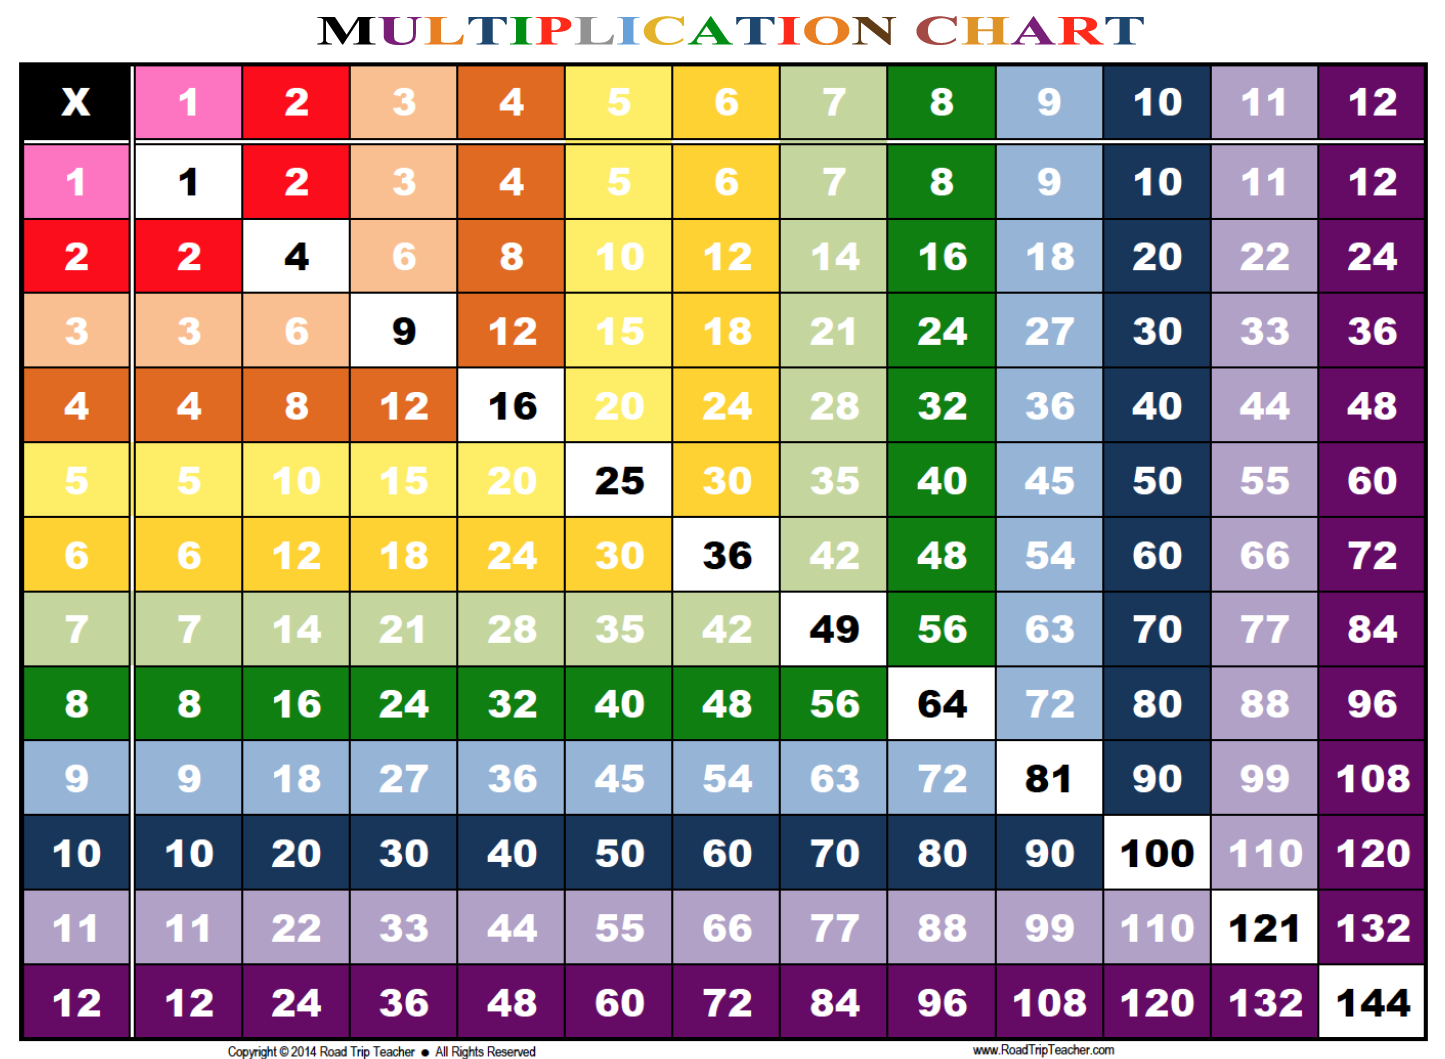 Multiplication Chart 1 12 Printable | Multiplication Chart for Printable 1-12 Multiplication Chart